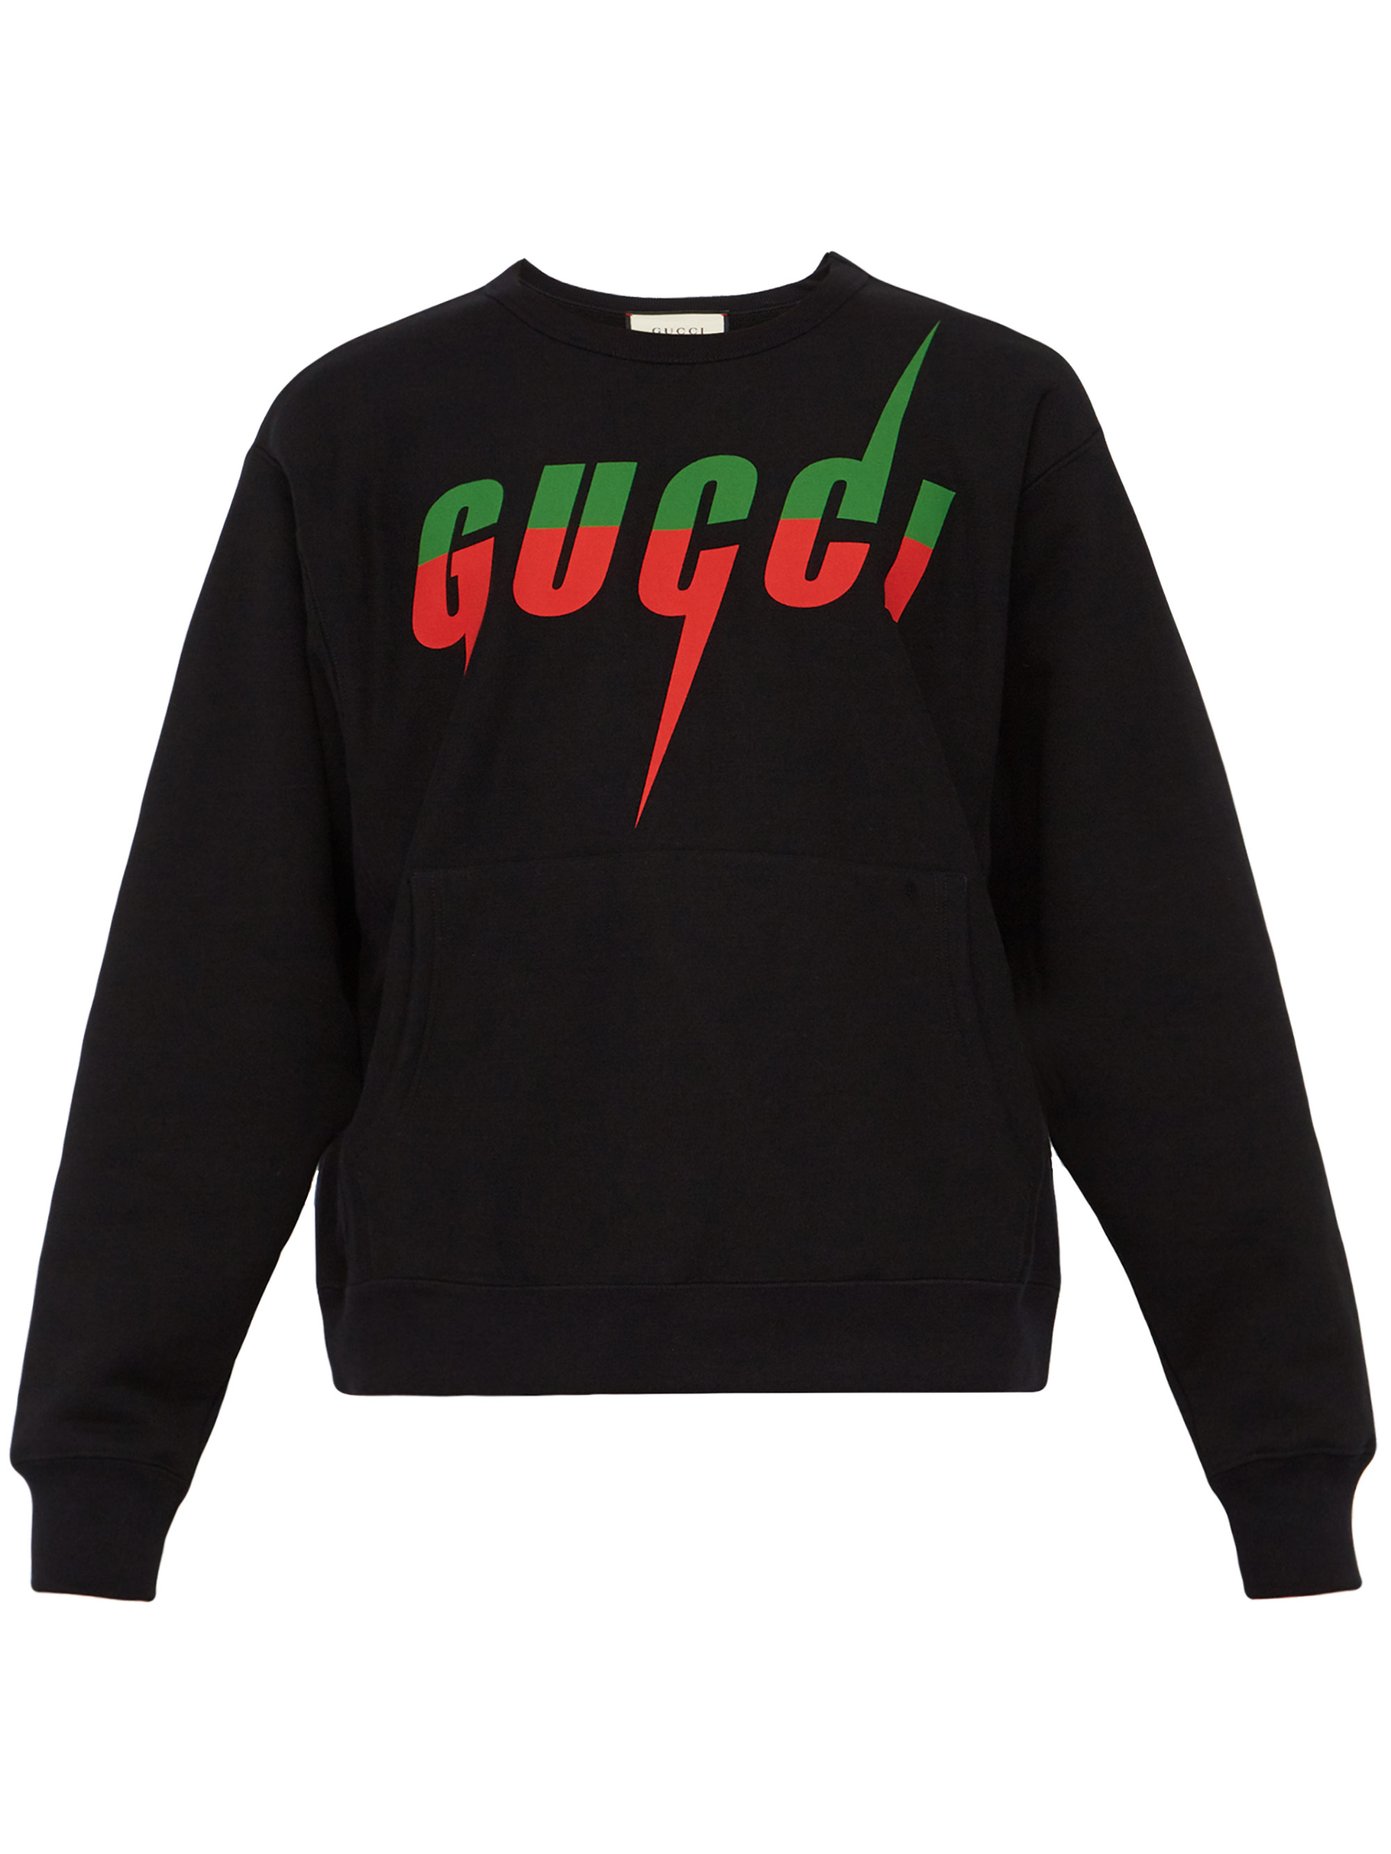 Blade cotton sweatshirt | Gucci 